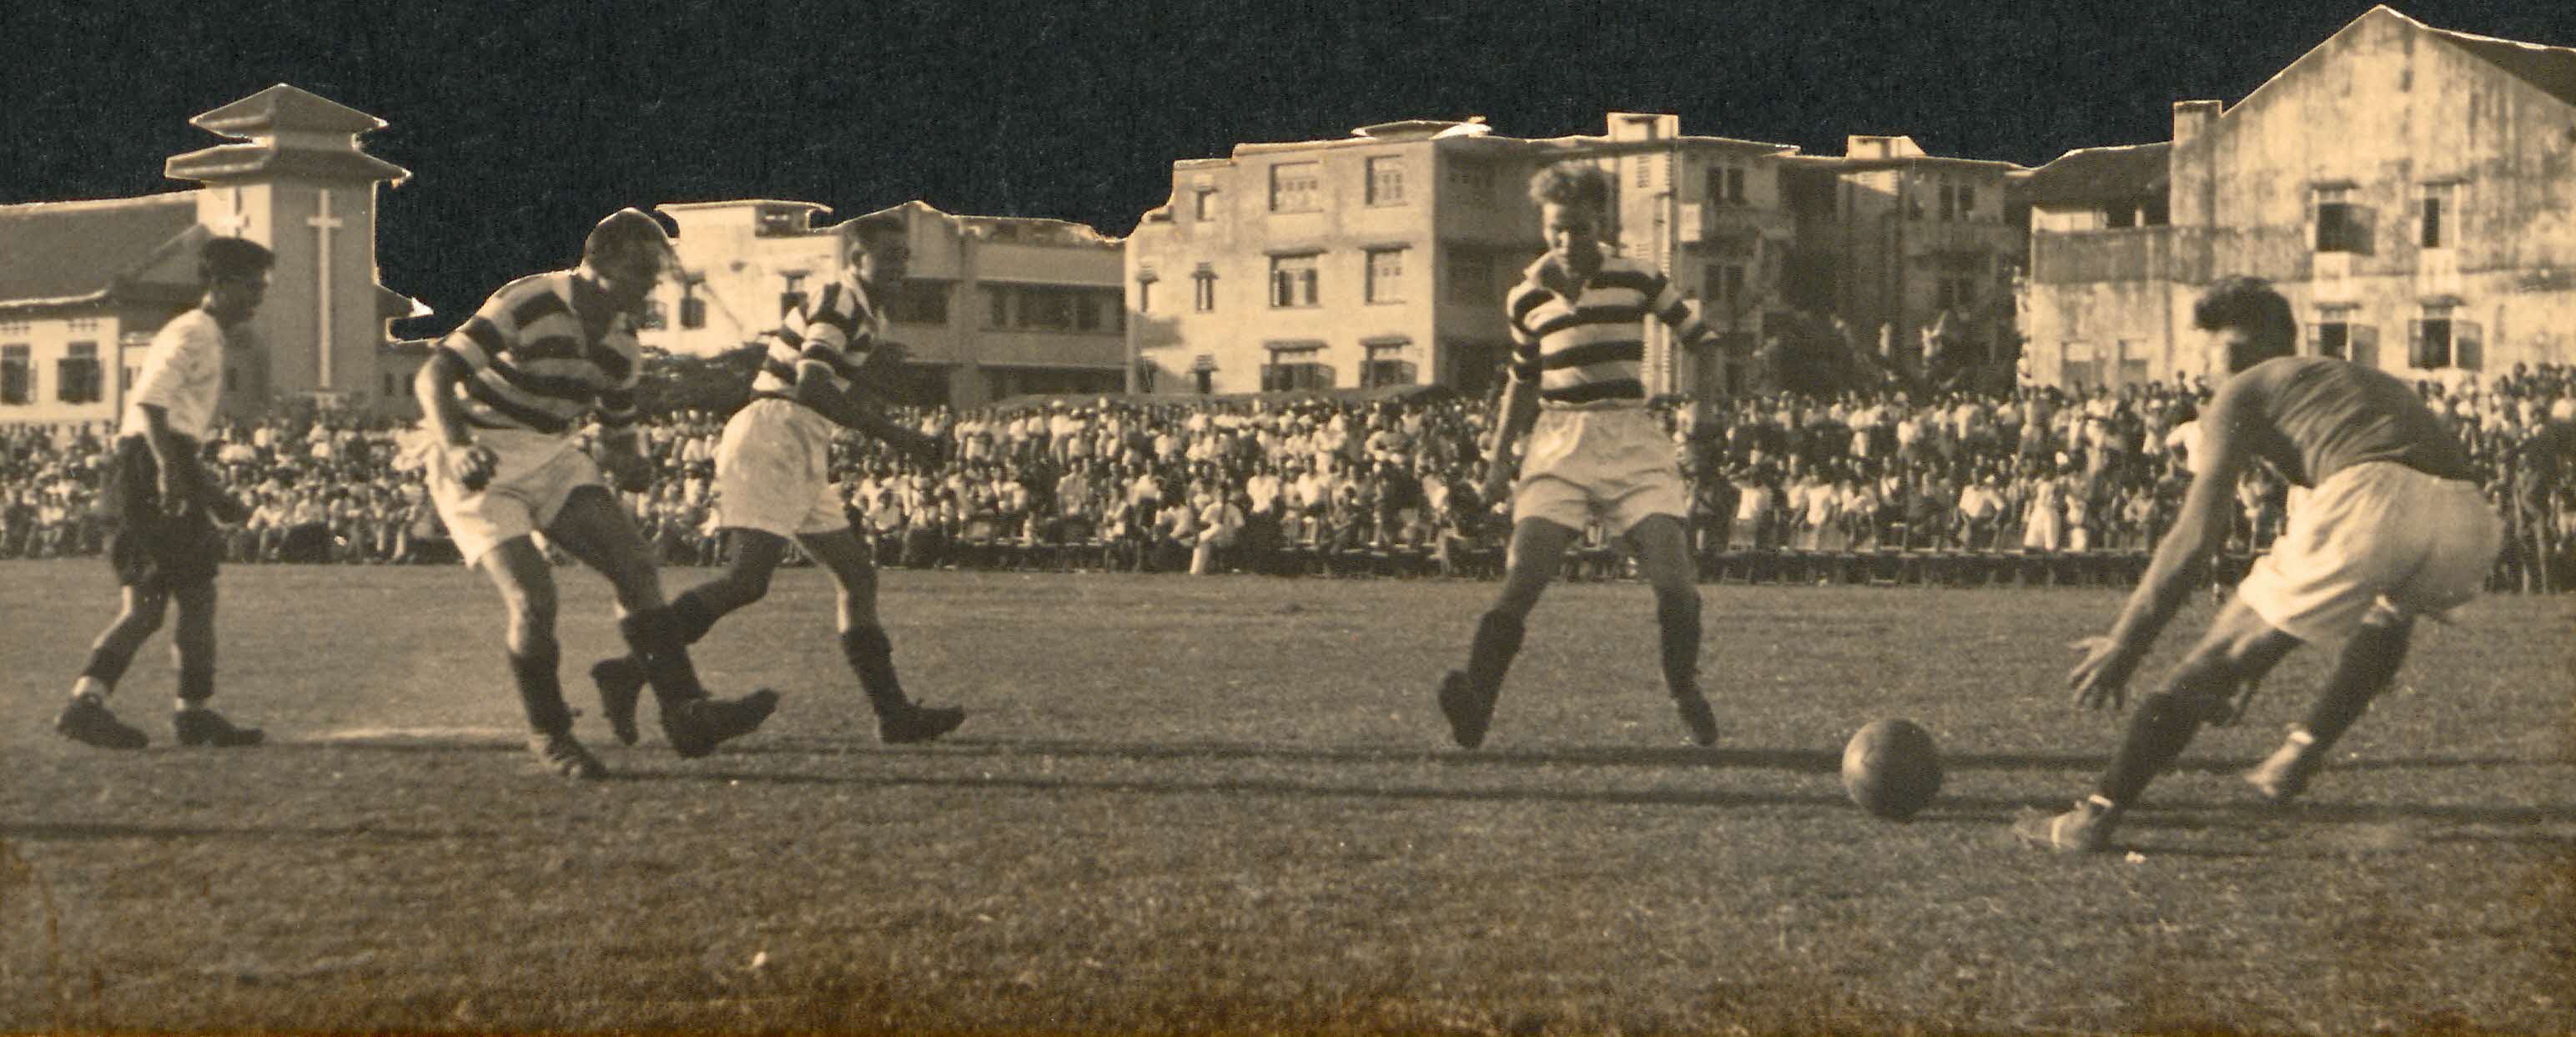 Football Match between Rovers and R.E.M.E at Jalan Besar Stadium, 1947